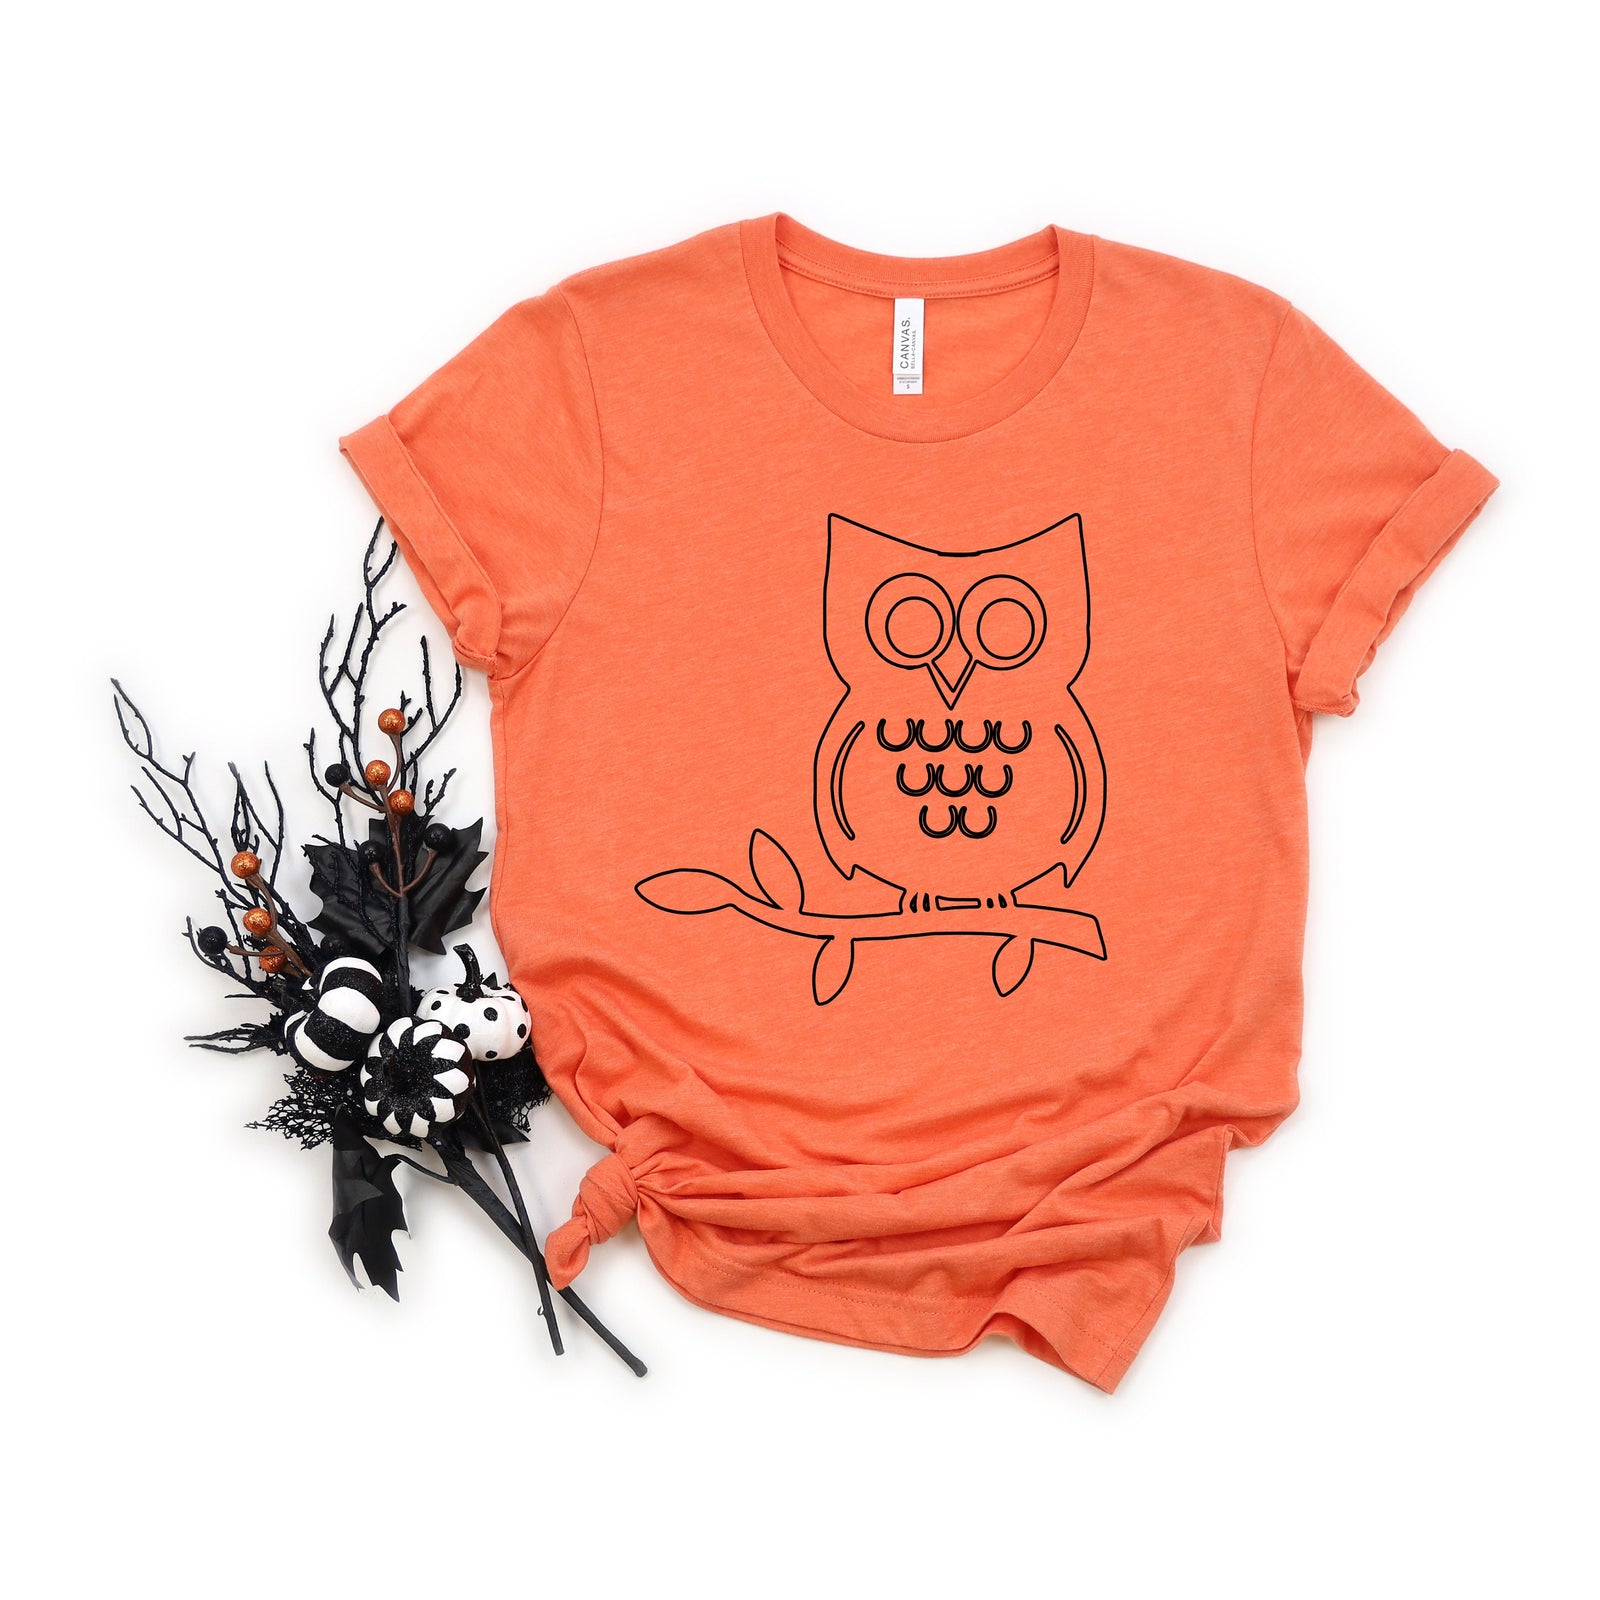 Owl Adult T Shirt - Halloween - Office - School - Teacher - Fun Not So Scary Shirts